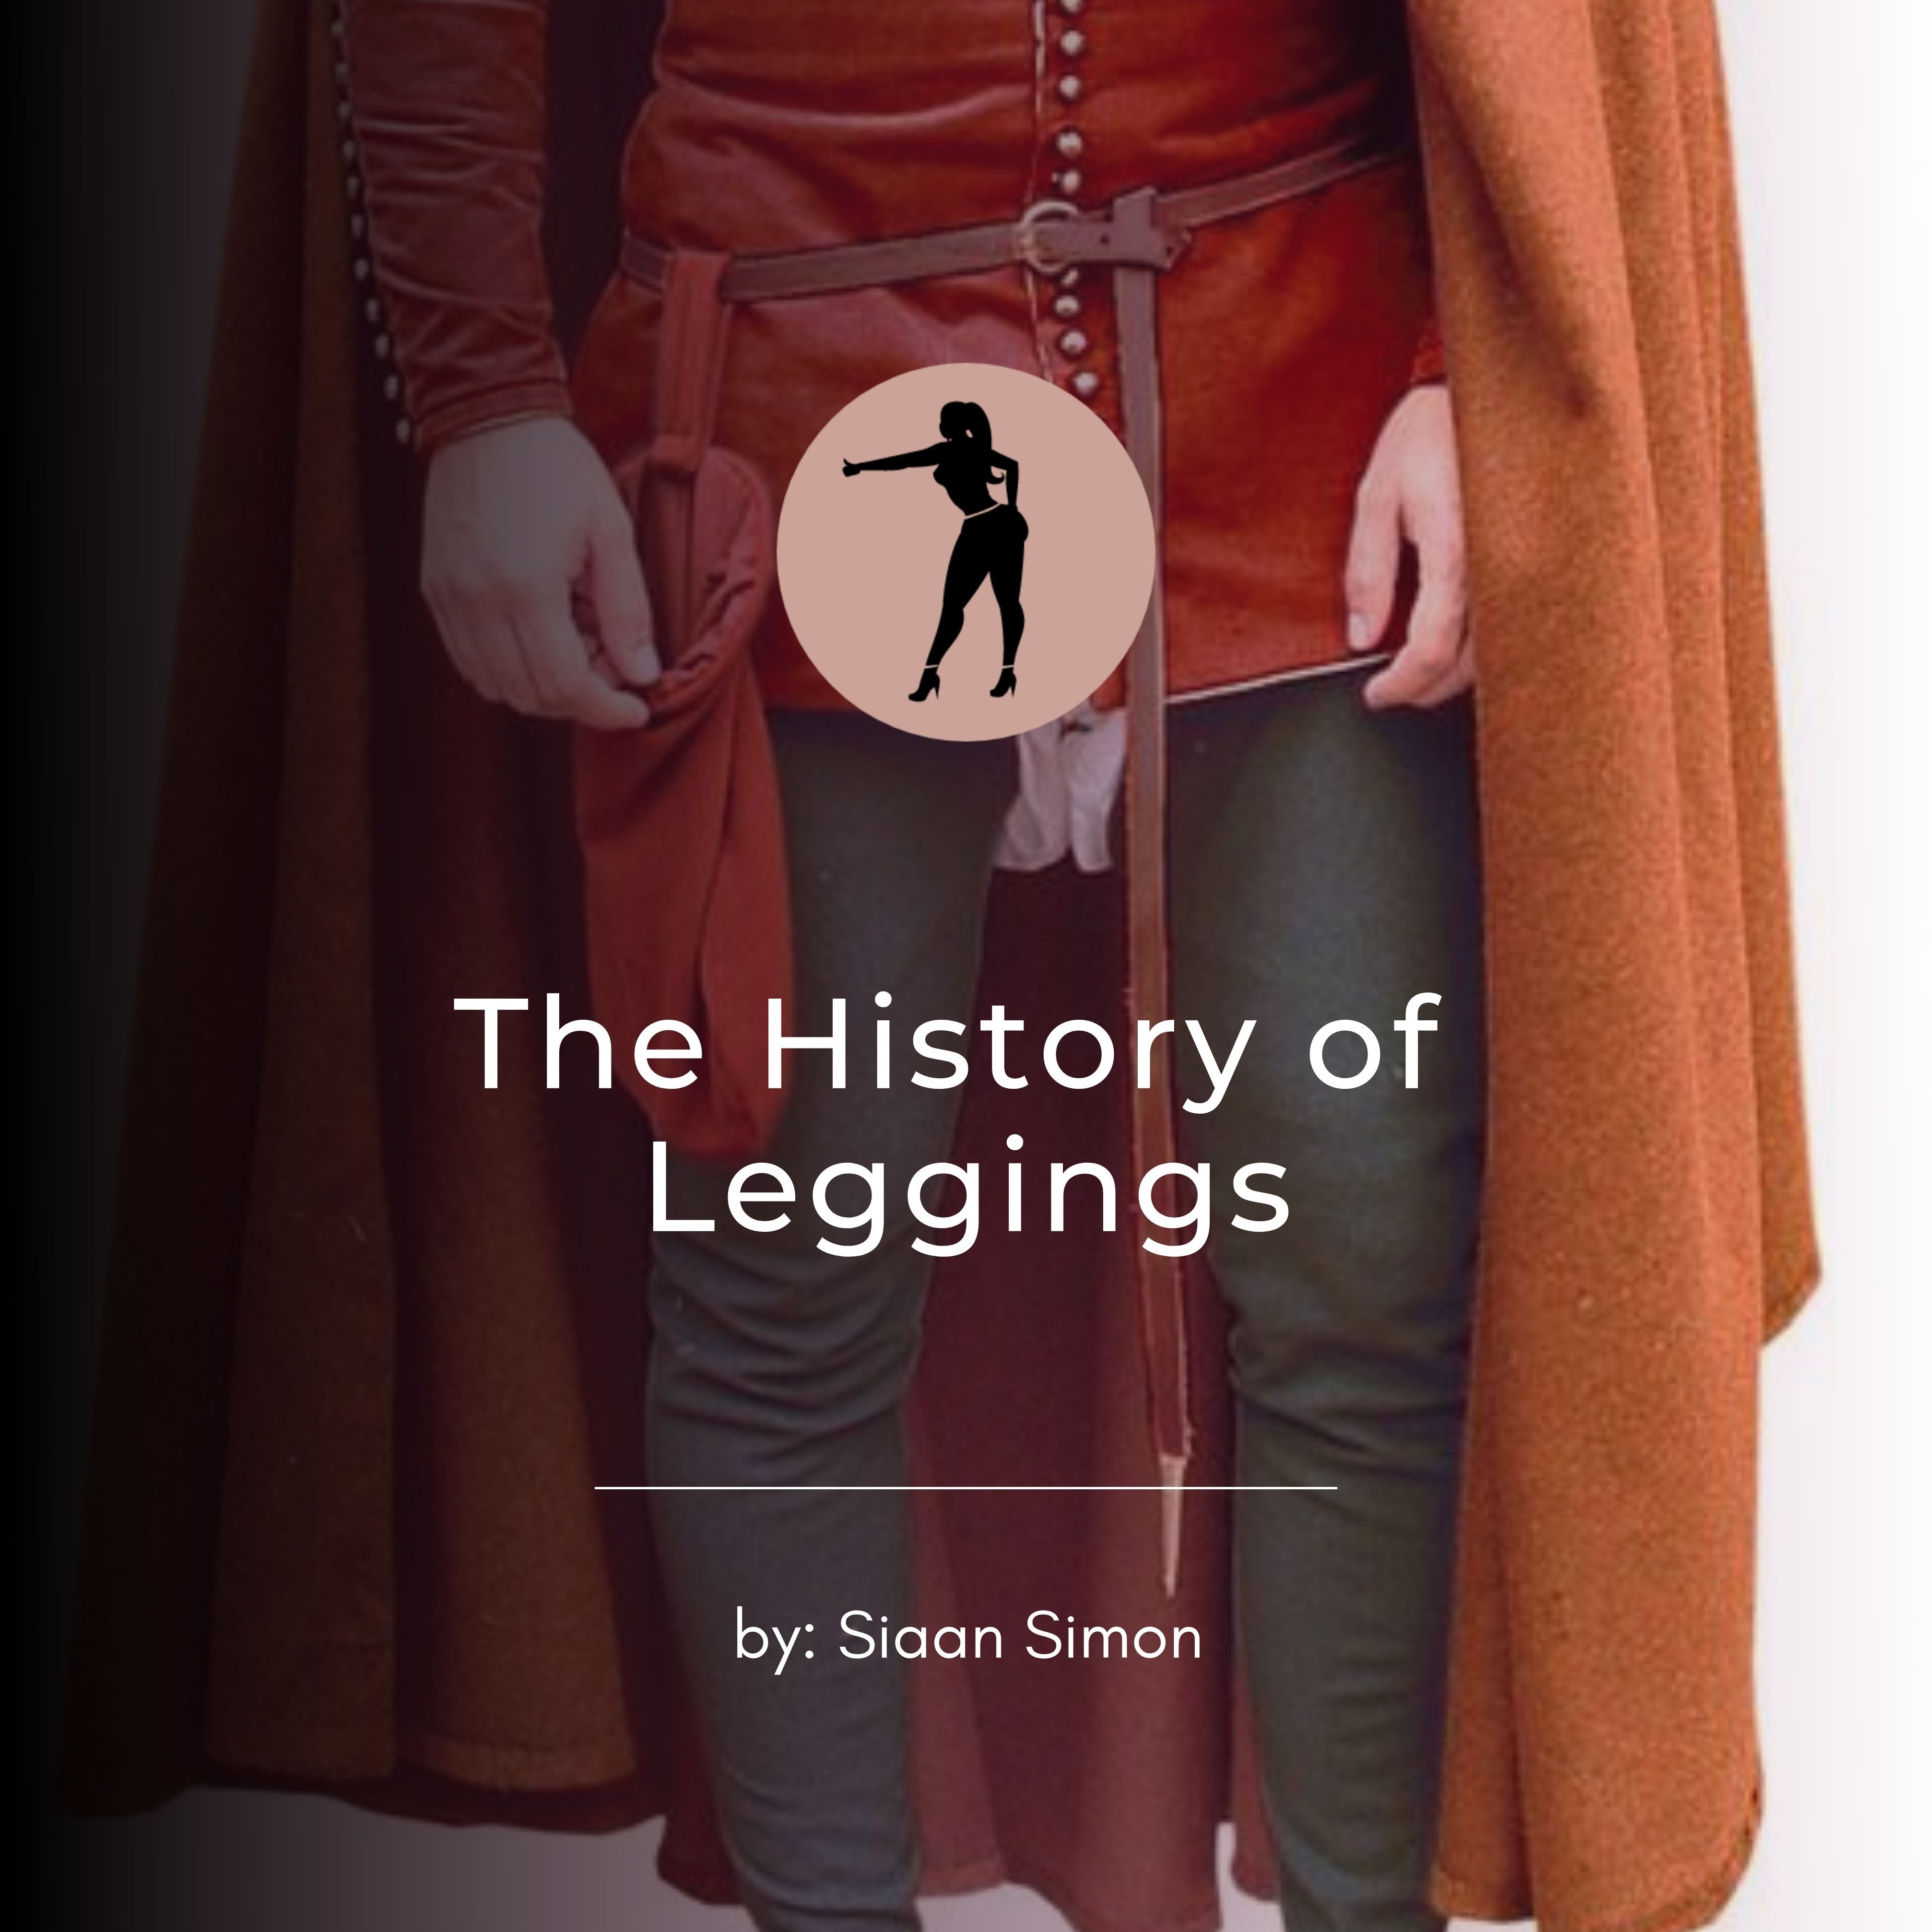 The History of Leggings